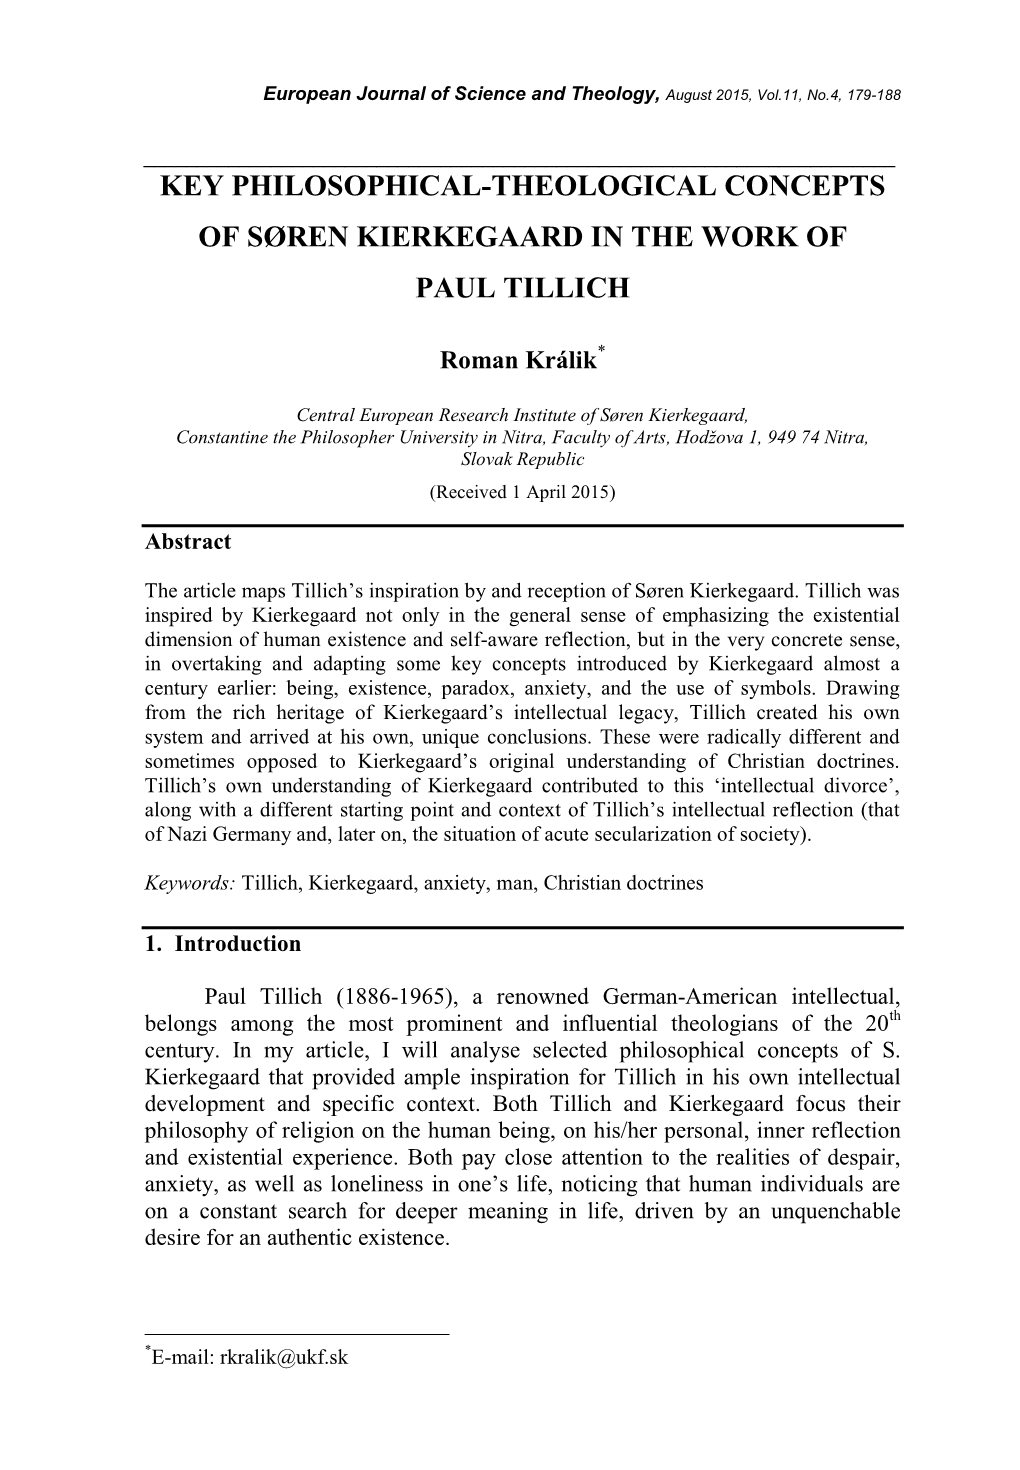 Key Philosophical-Theological Concepts of Søren Kierkegaard in the Work of Paul Tillich